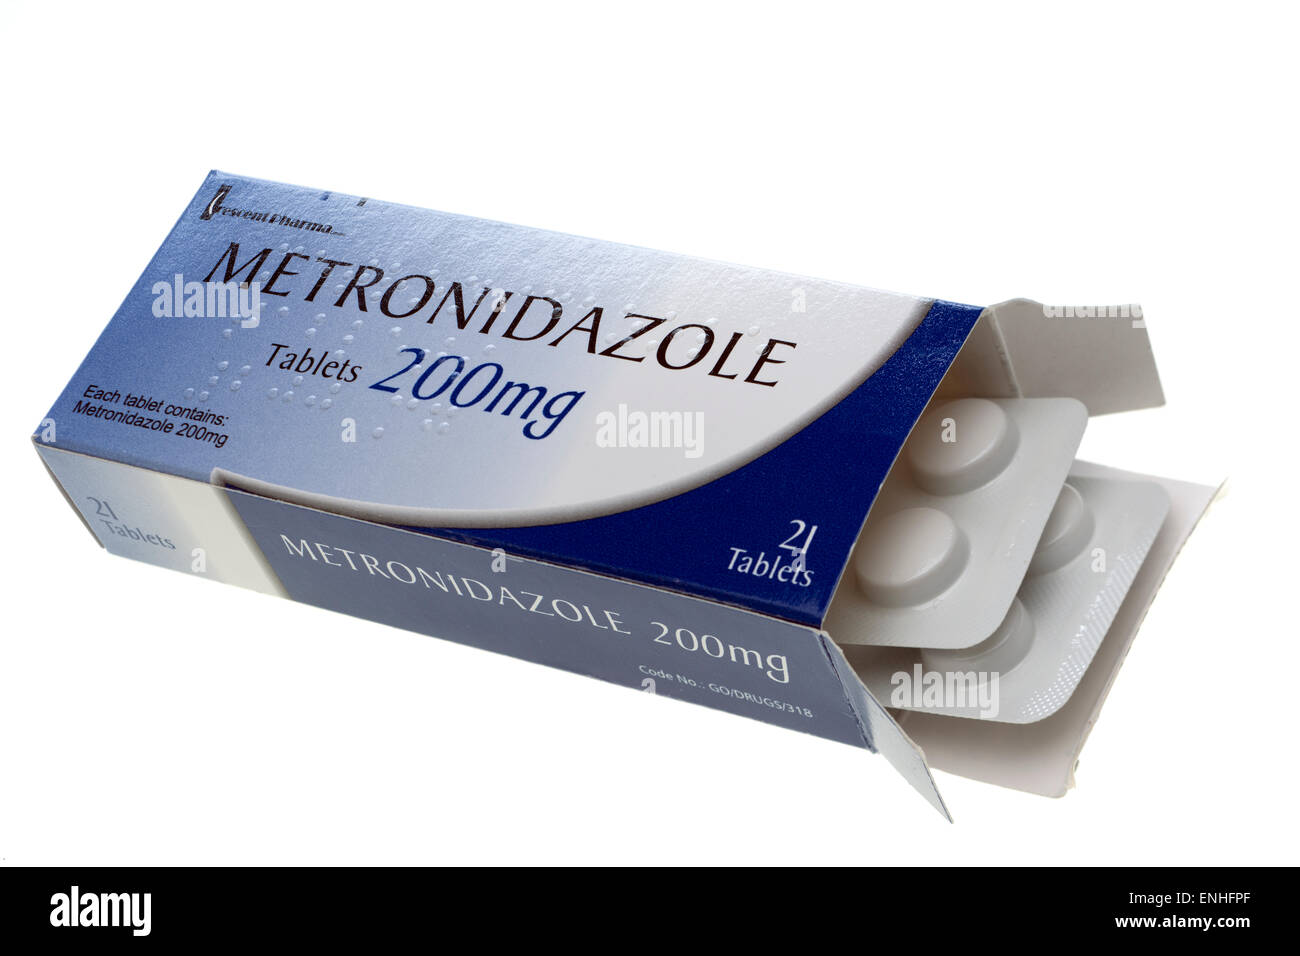 200mg Metronidazole tablets Stock Photo - Alamy